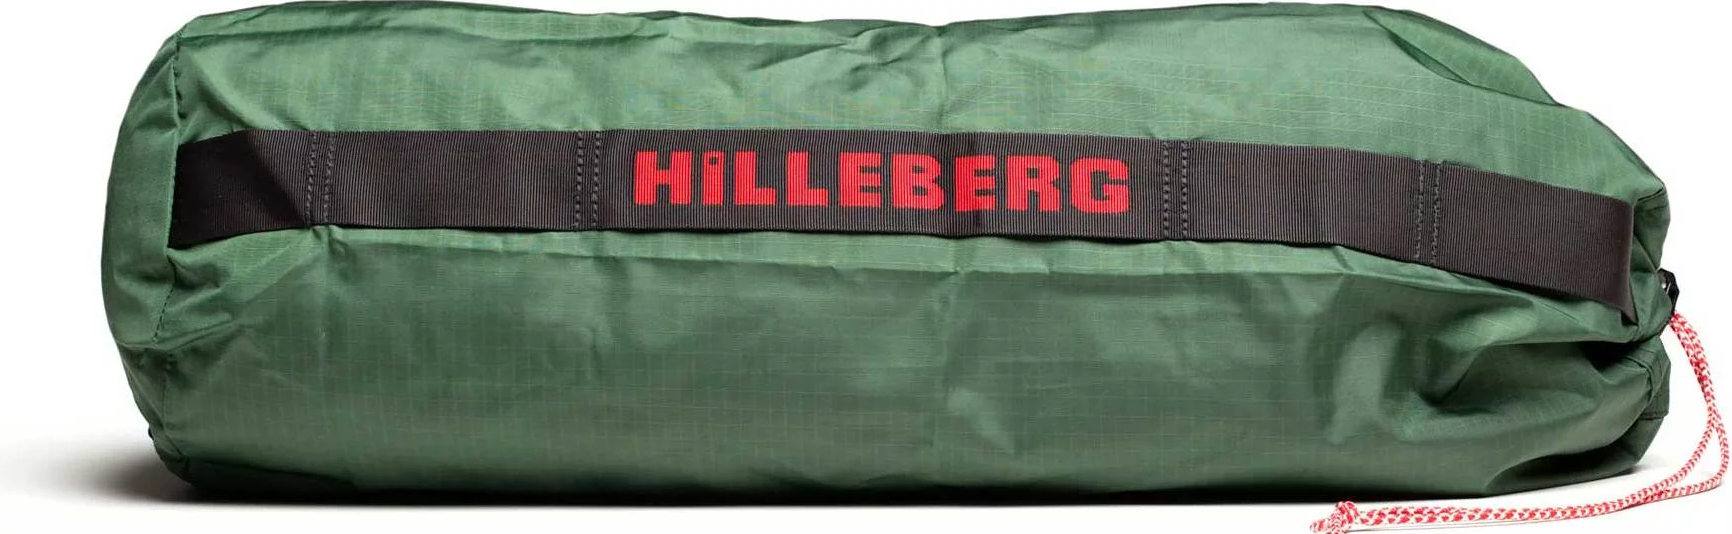 Hilleberg Tent Bag 63x25 XP